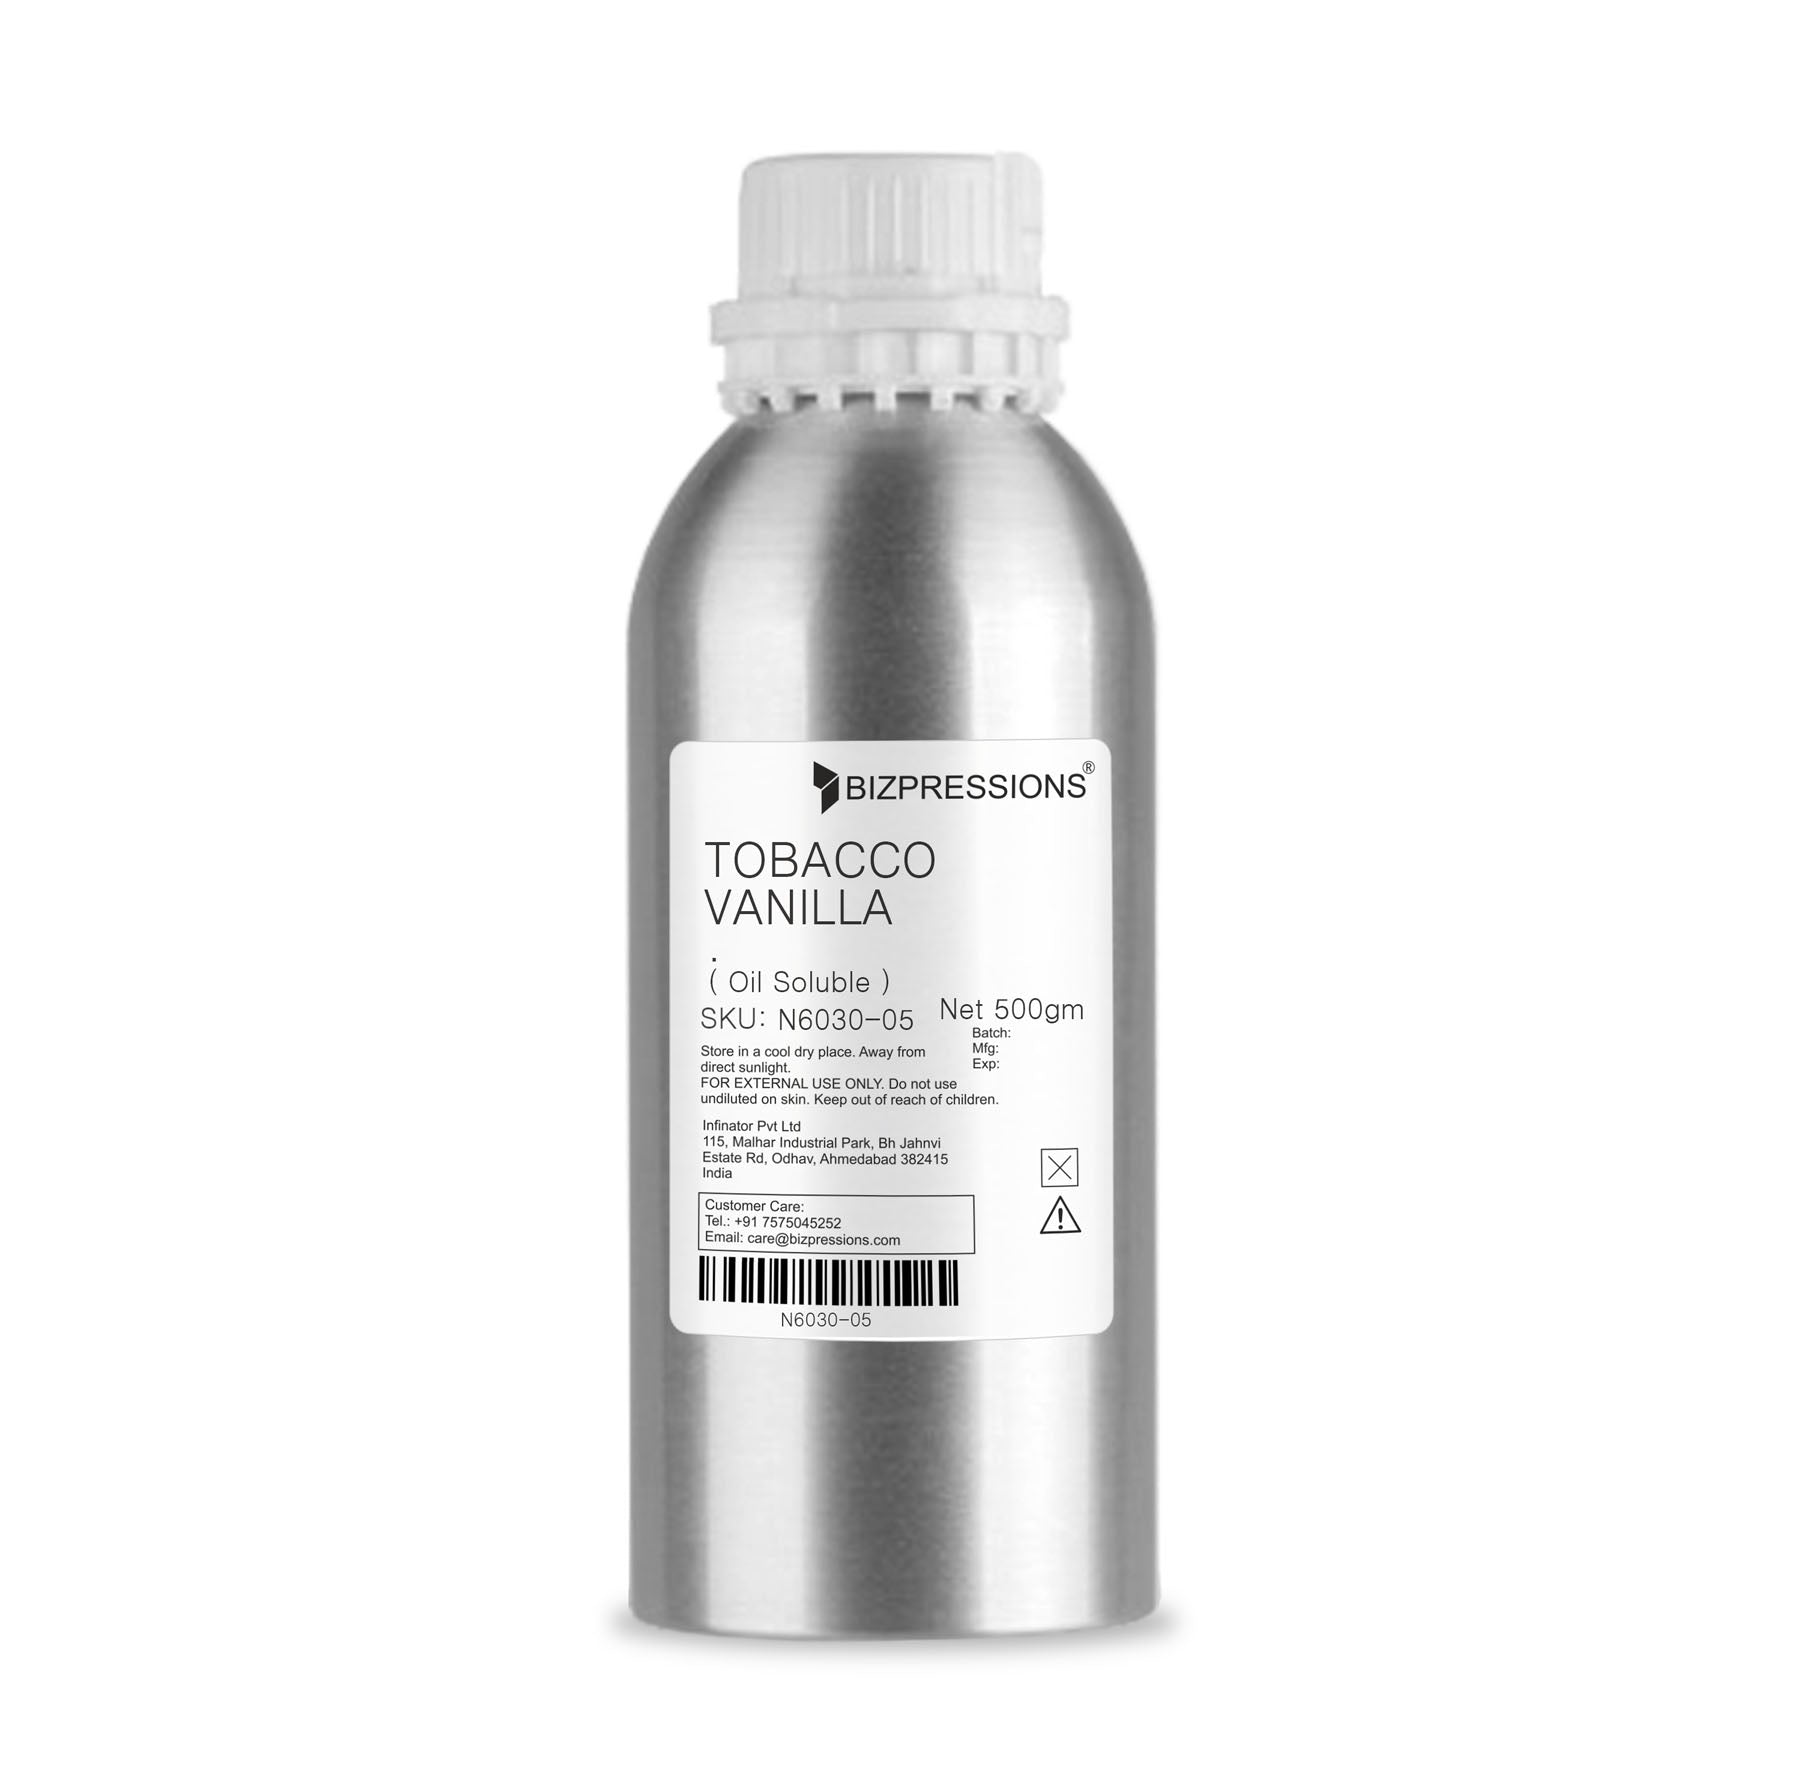 TOBACCO VANILLA - Fragrance ( Oil Soluble ) - 500 gm